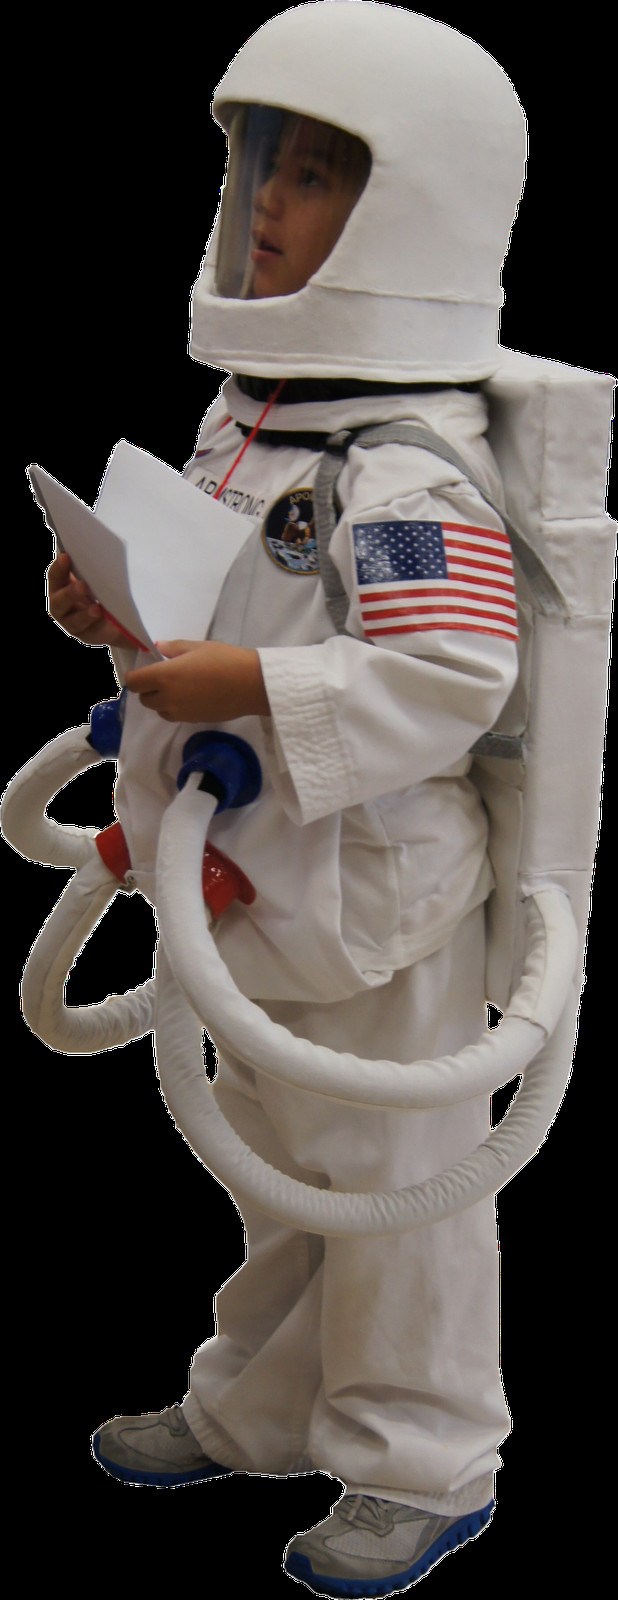 DIY Astronaut Costumes
 ivetastic DIY armstrong astronaut suit